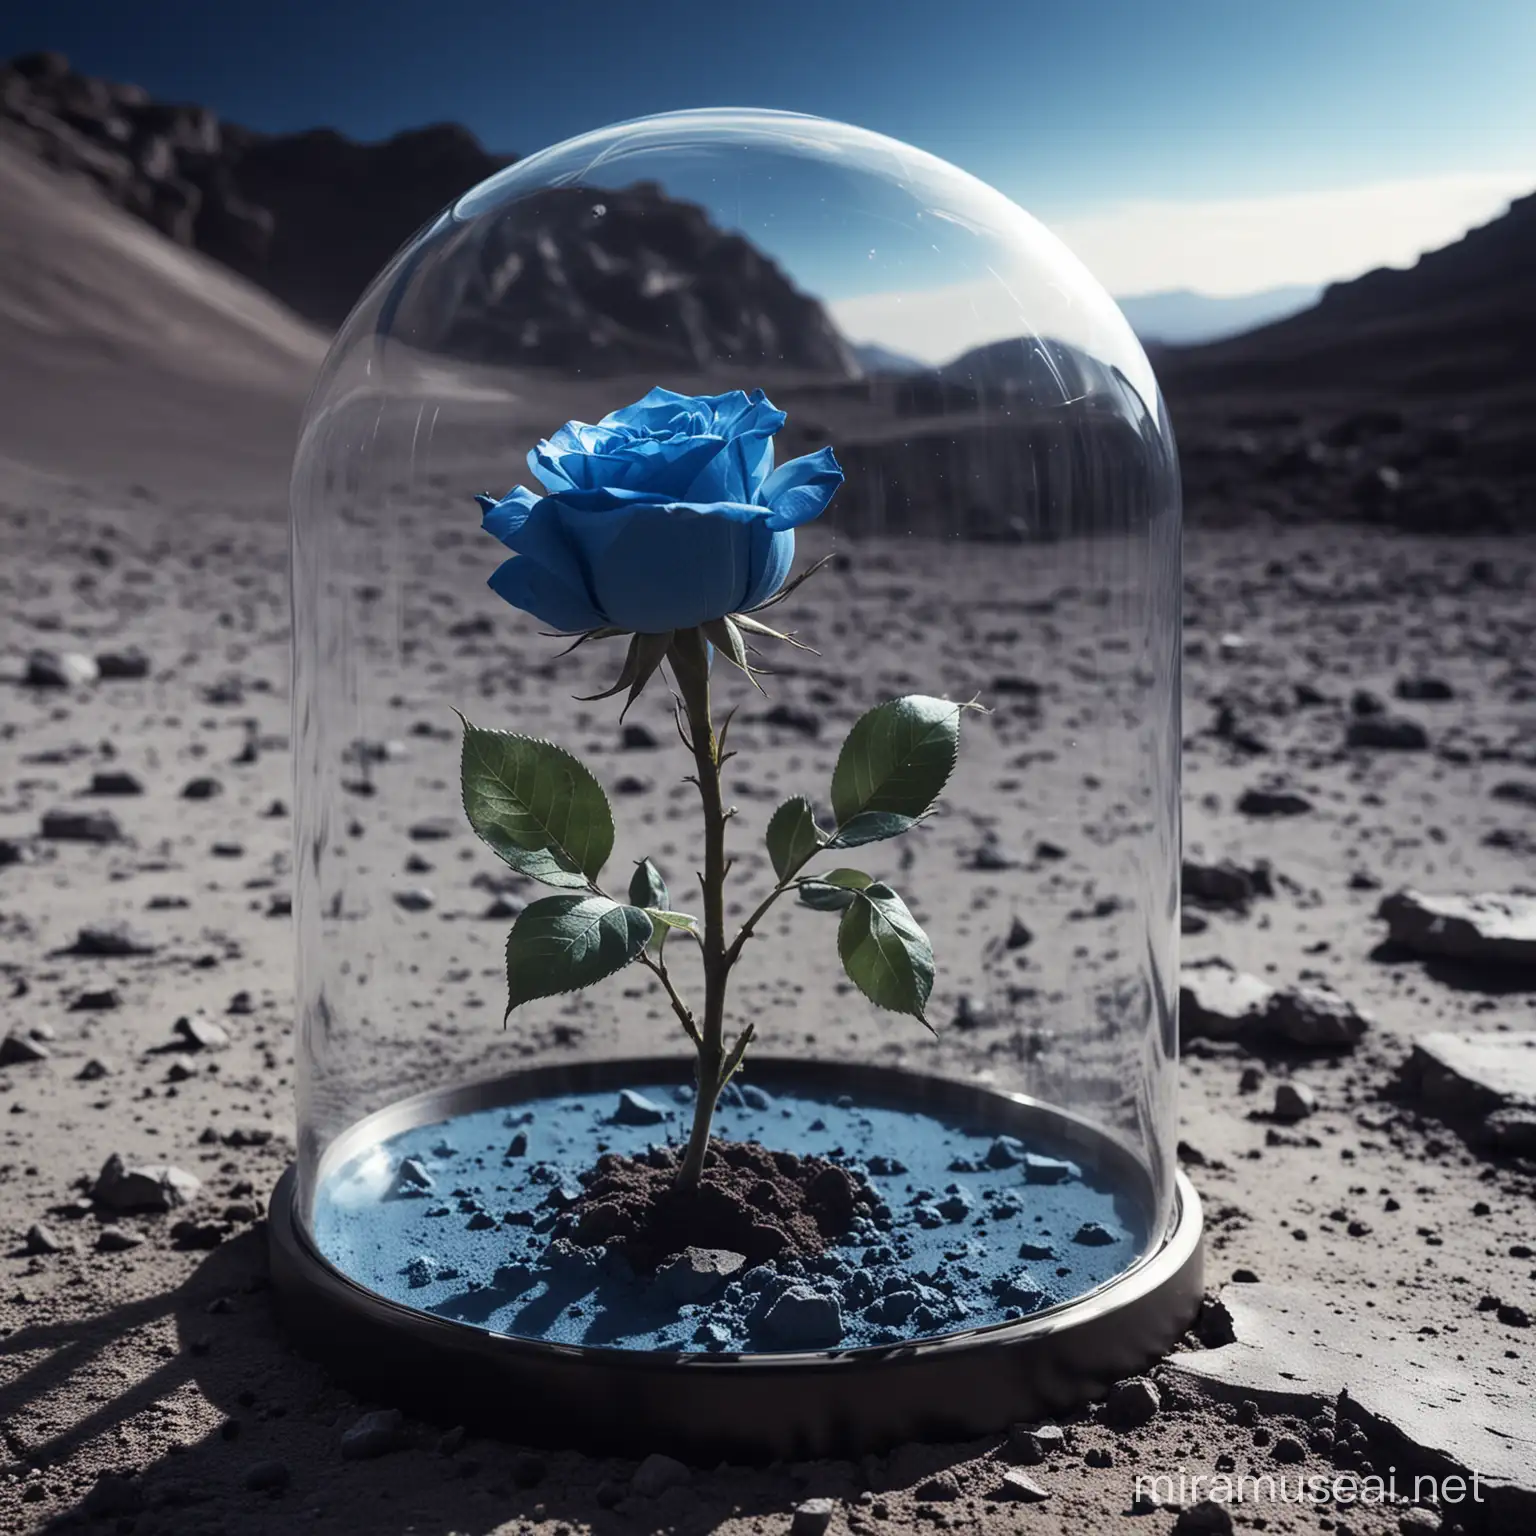 Blue Rose Under Glass Dome on Lunar Surface